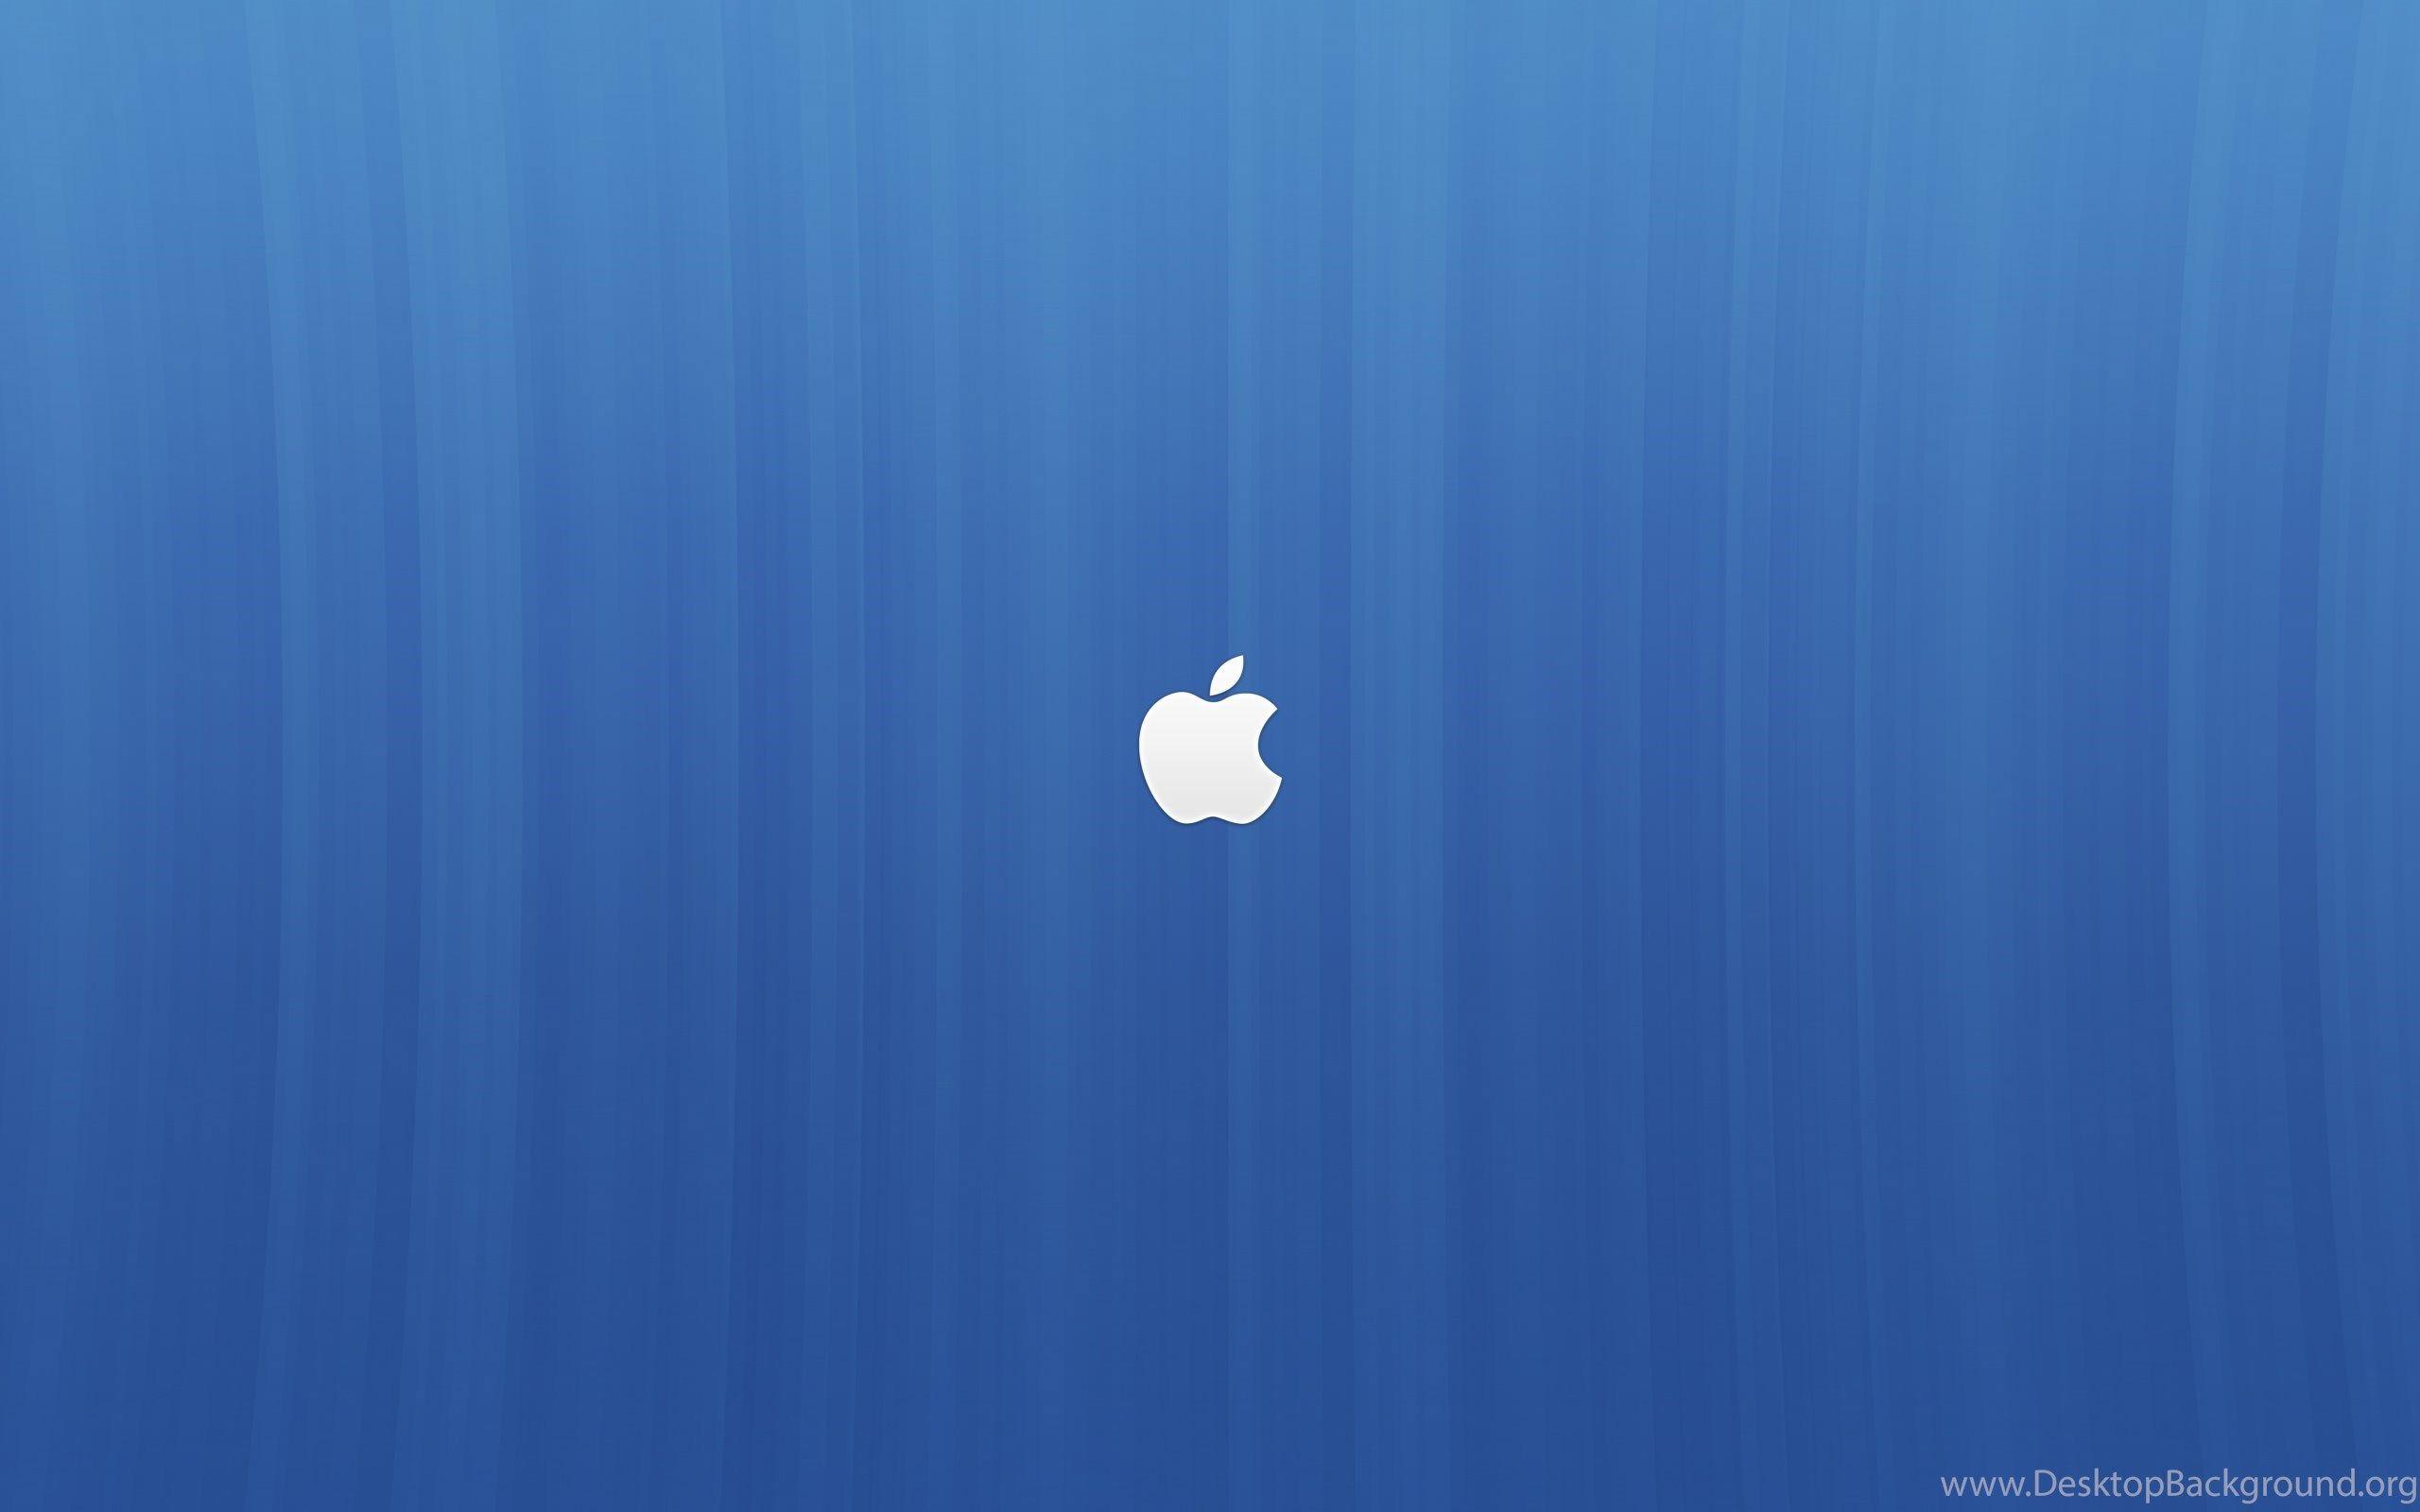 Blue Apple Logo - Small Apple Logo Blue Backgrounds Wallpapers Desktop Background